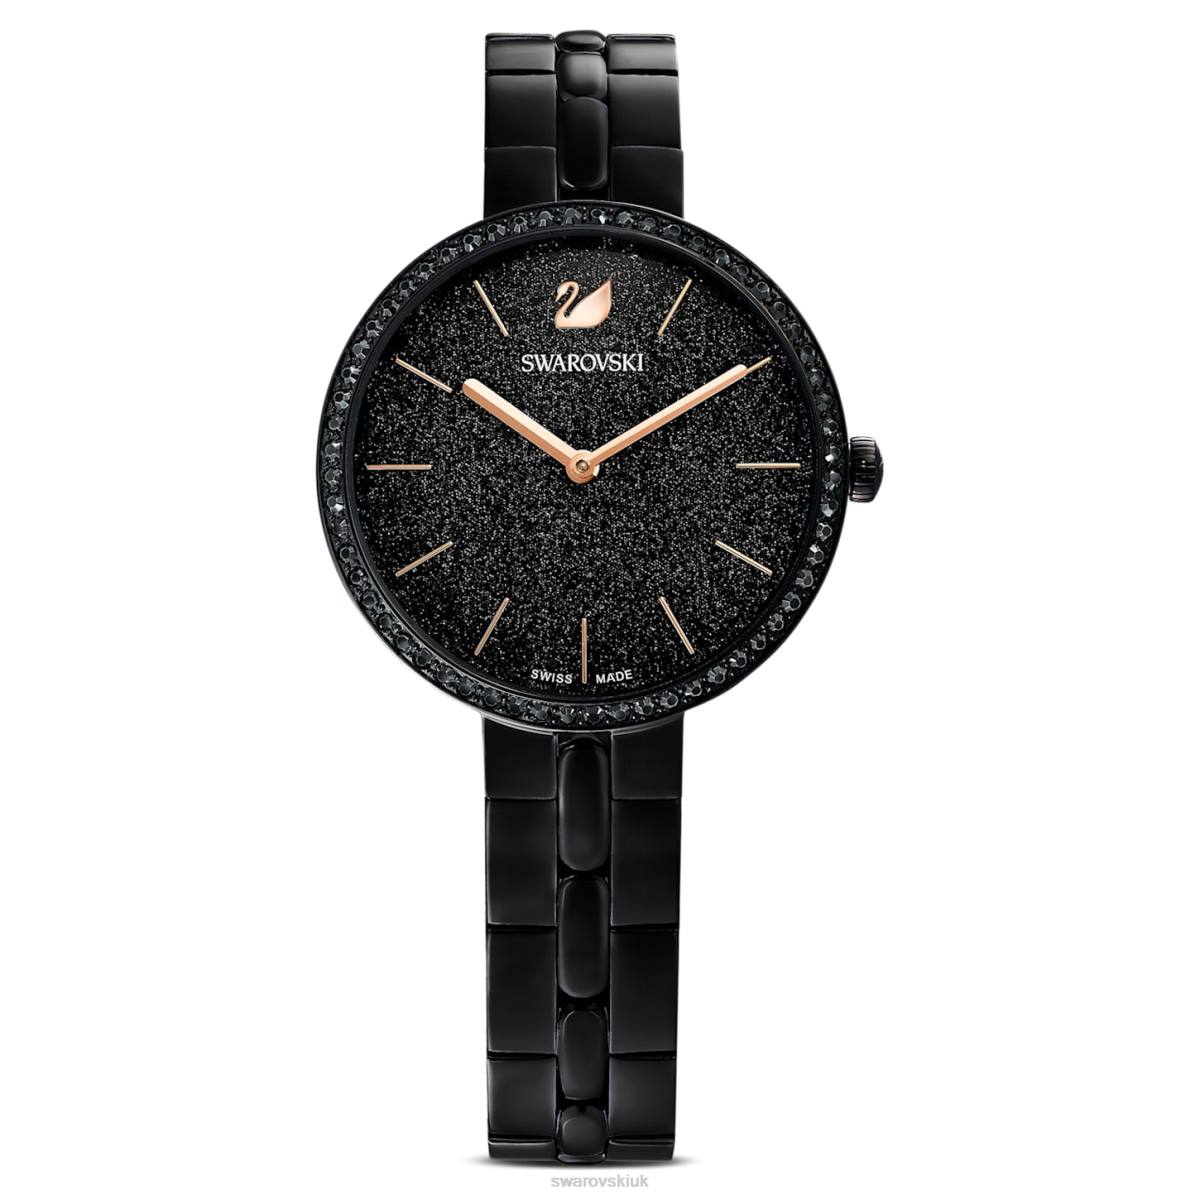 Accessories Swarovski Cosmopolitan watch Swiss Made, Metal bracelet, Black, Black finish 48JX1234